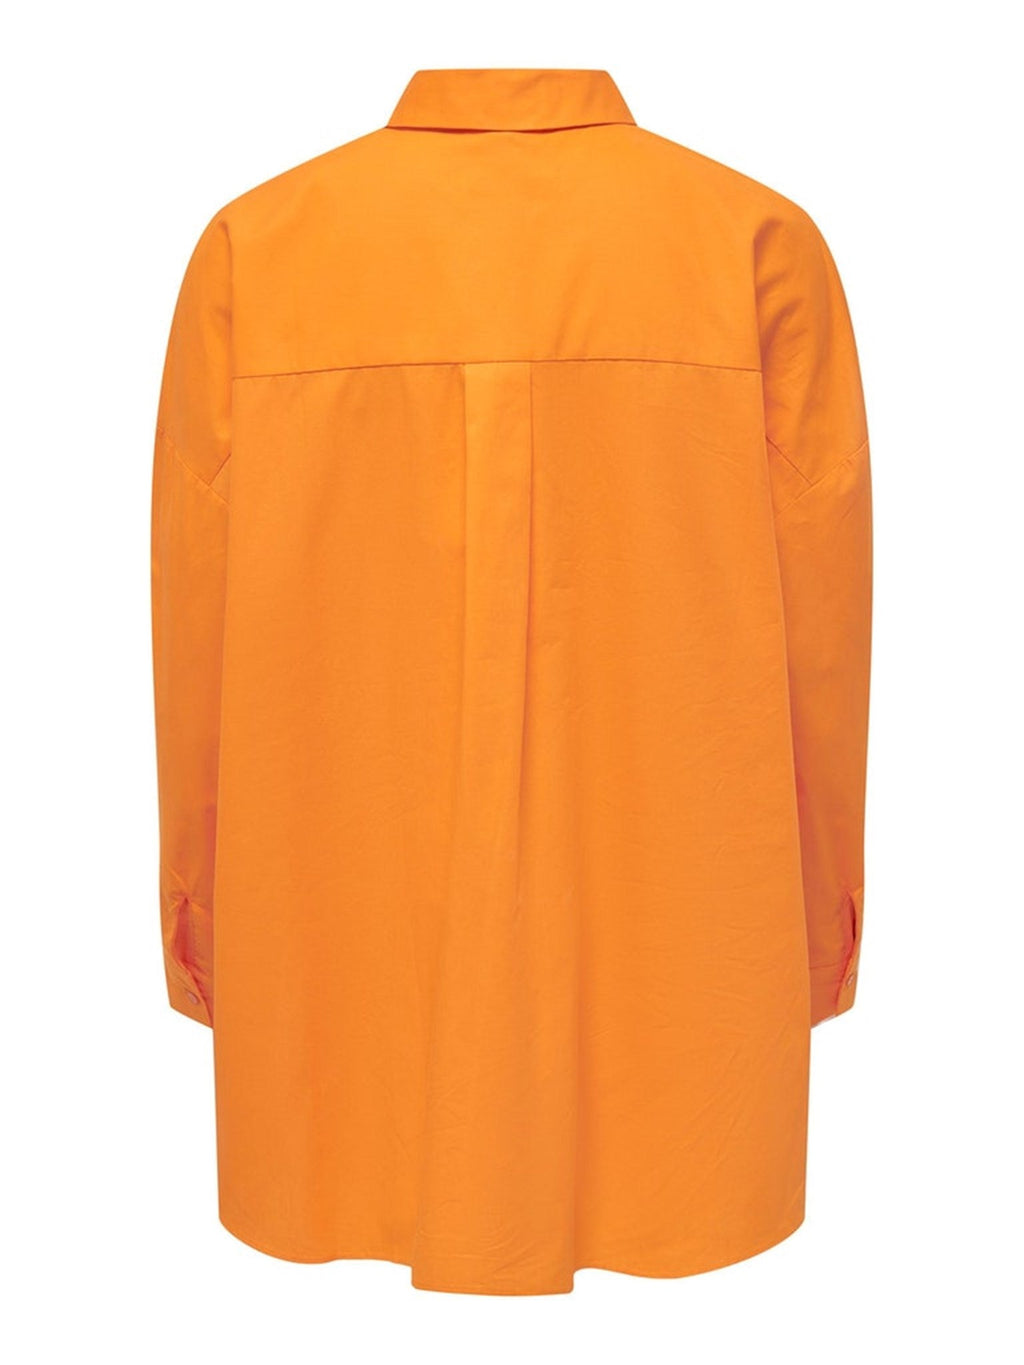 Nicole Shirt - Flame Orange